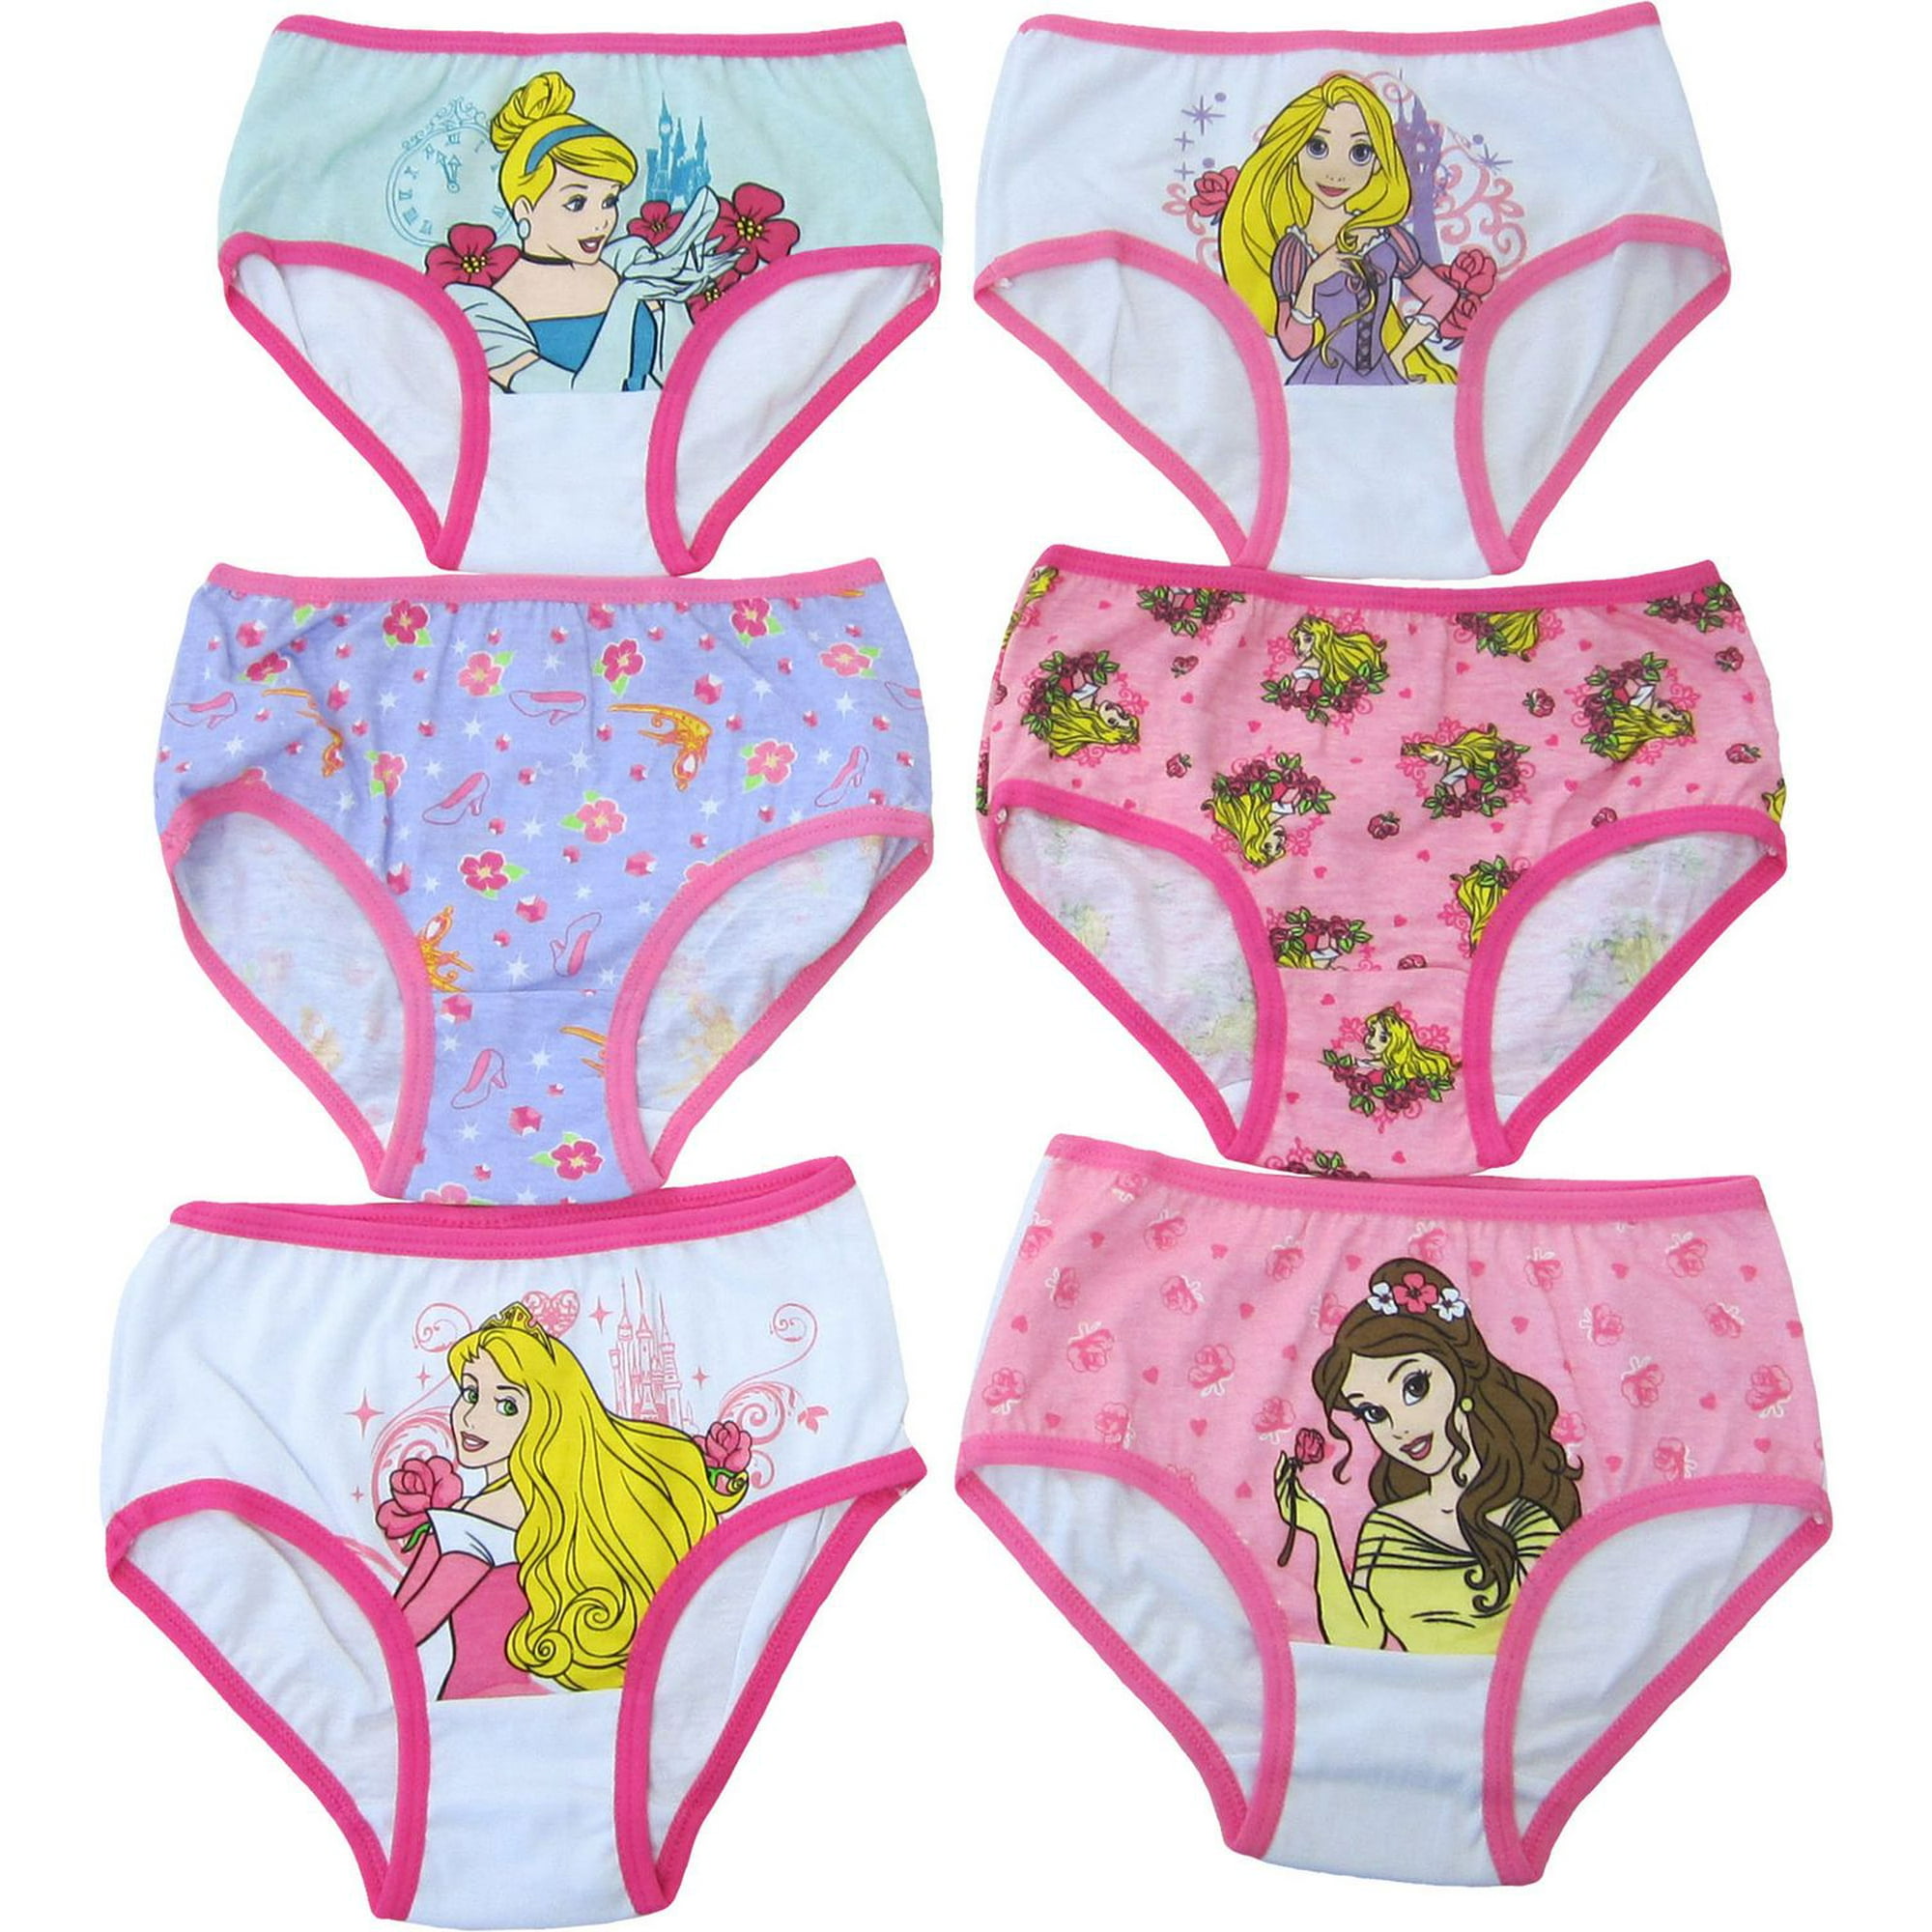 Handcraft Disney Princess 3 pack girls panties SIZE 4 BRAND NEW!